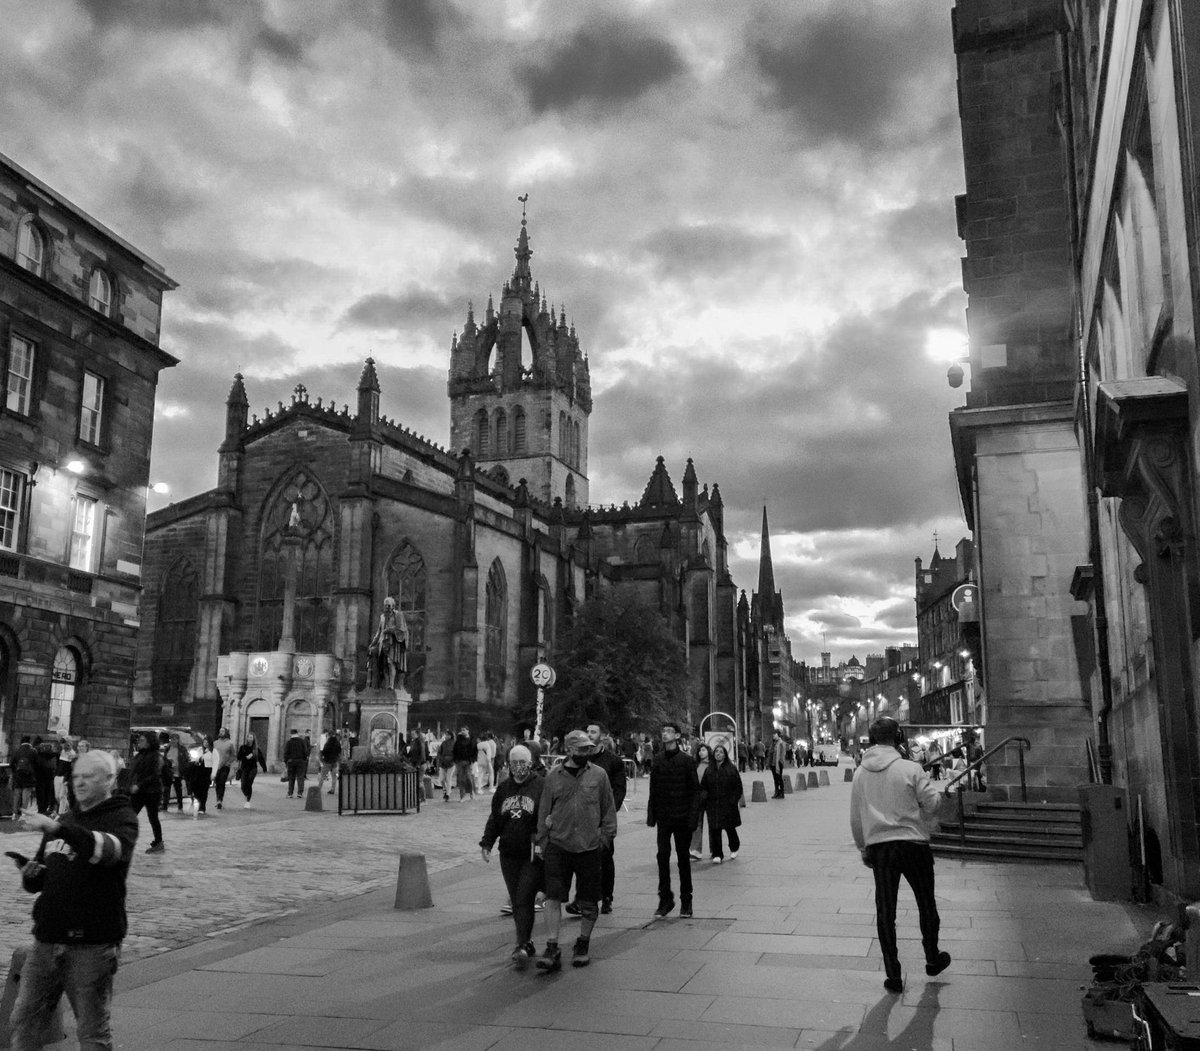 The Royal Mile near St. Giles' Cathedral in Edinburgh, Scotland.

#photography #blackandwhite #blackandwhitephotography #edinburgh #scotland #street #streetphotography #ThePhotoHour #sonyrx100vii #kfiferphotography